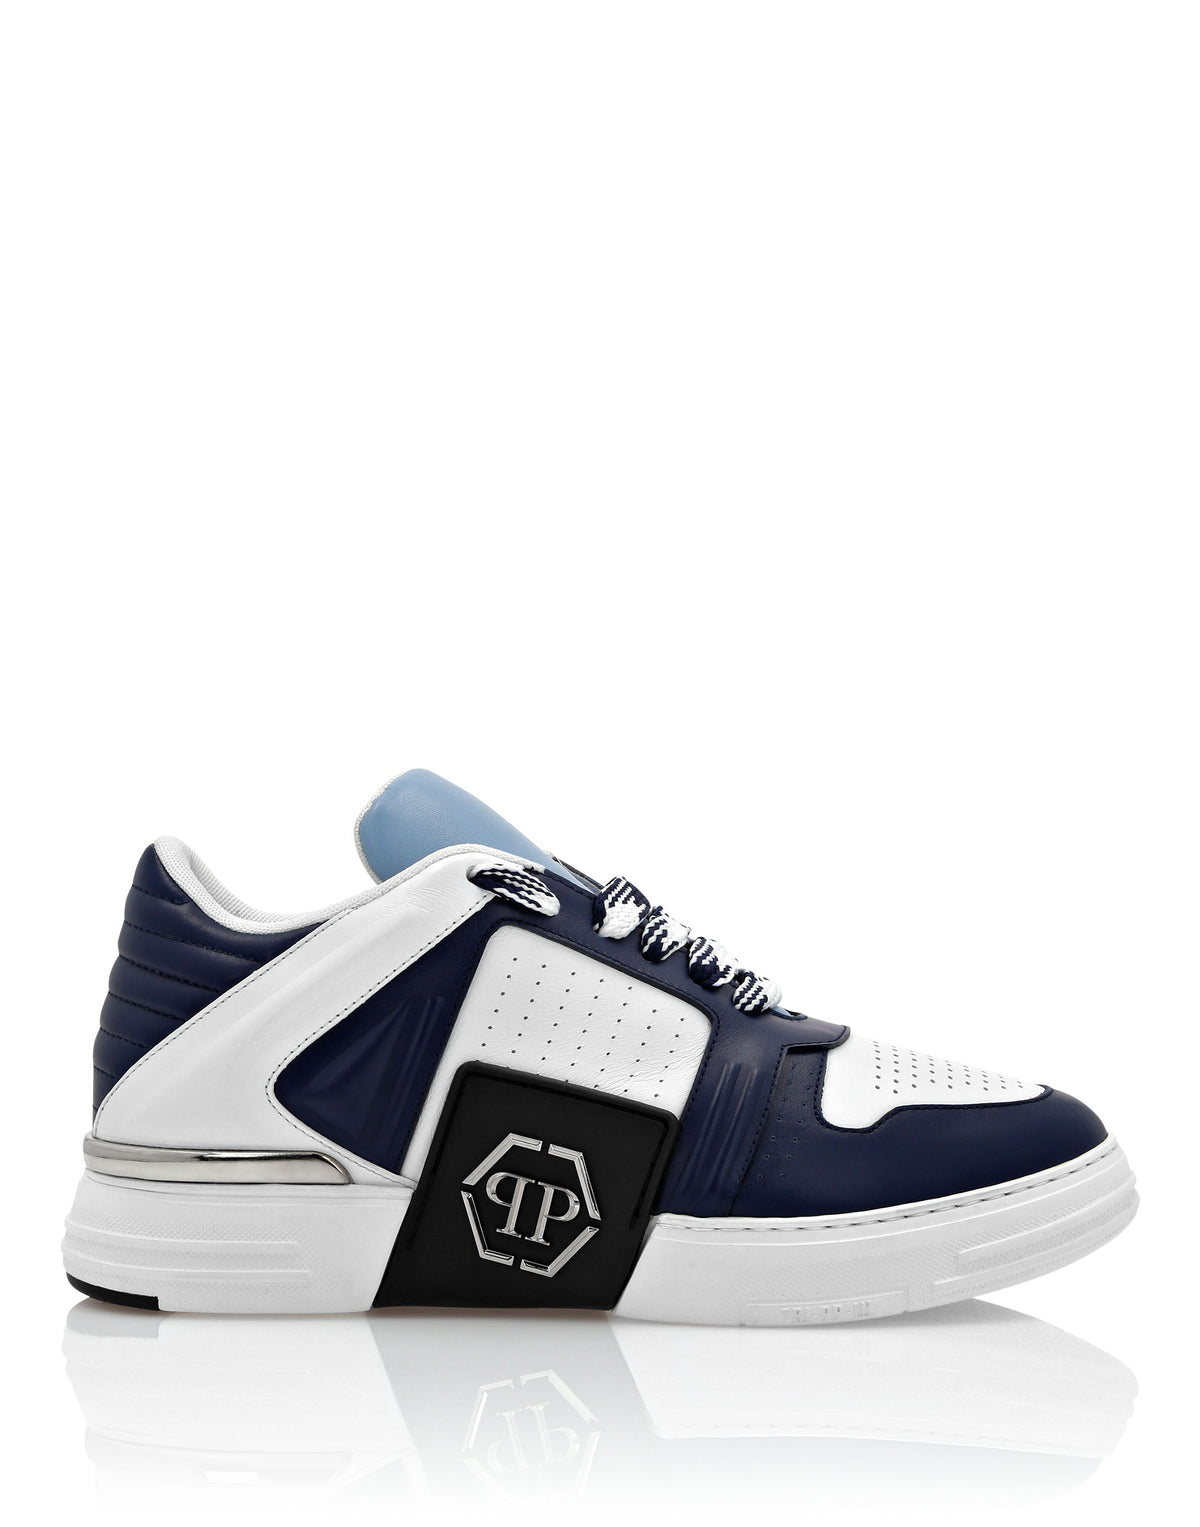 Leather Lo-Top Sneakers Hexagon dark blue / ligh tblue